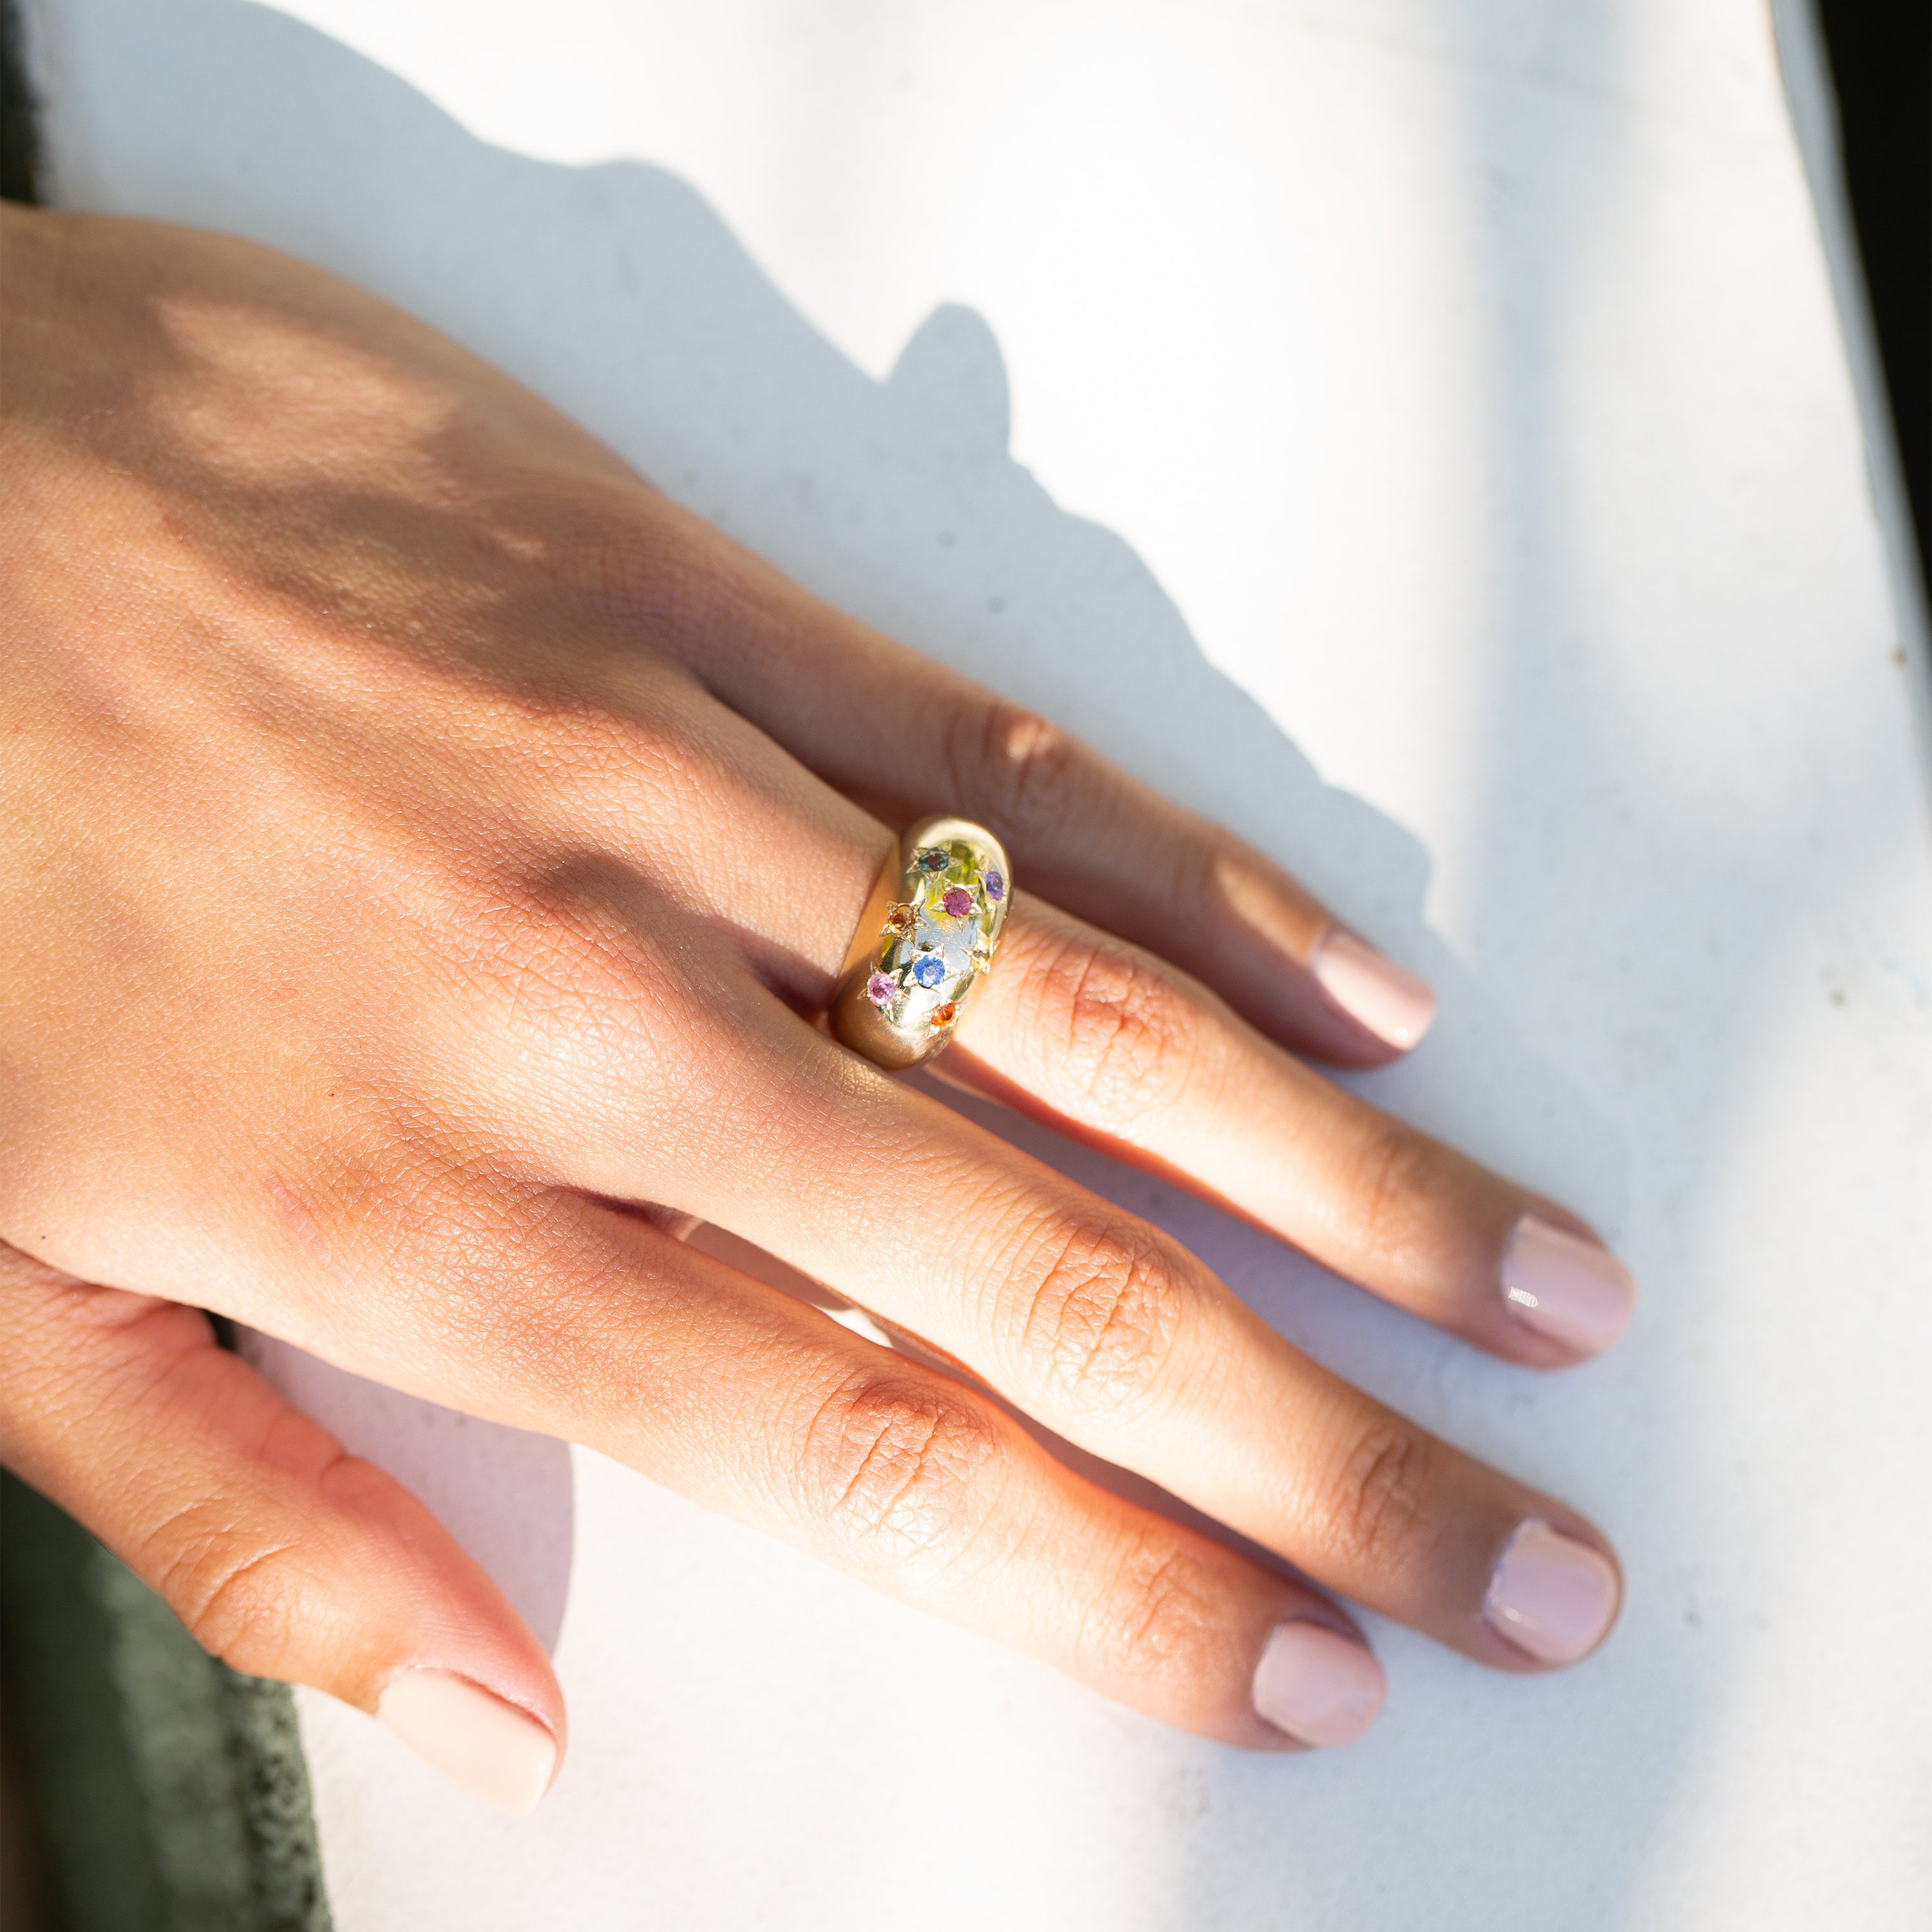 The F&B Multi-Colored Sapphire Starburst Dome Ring